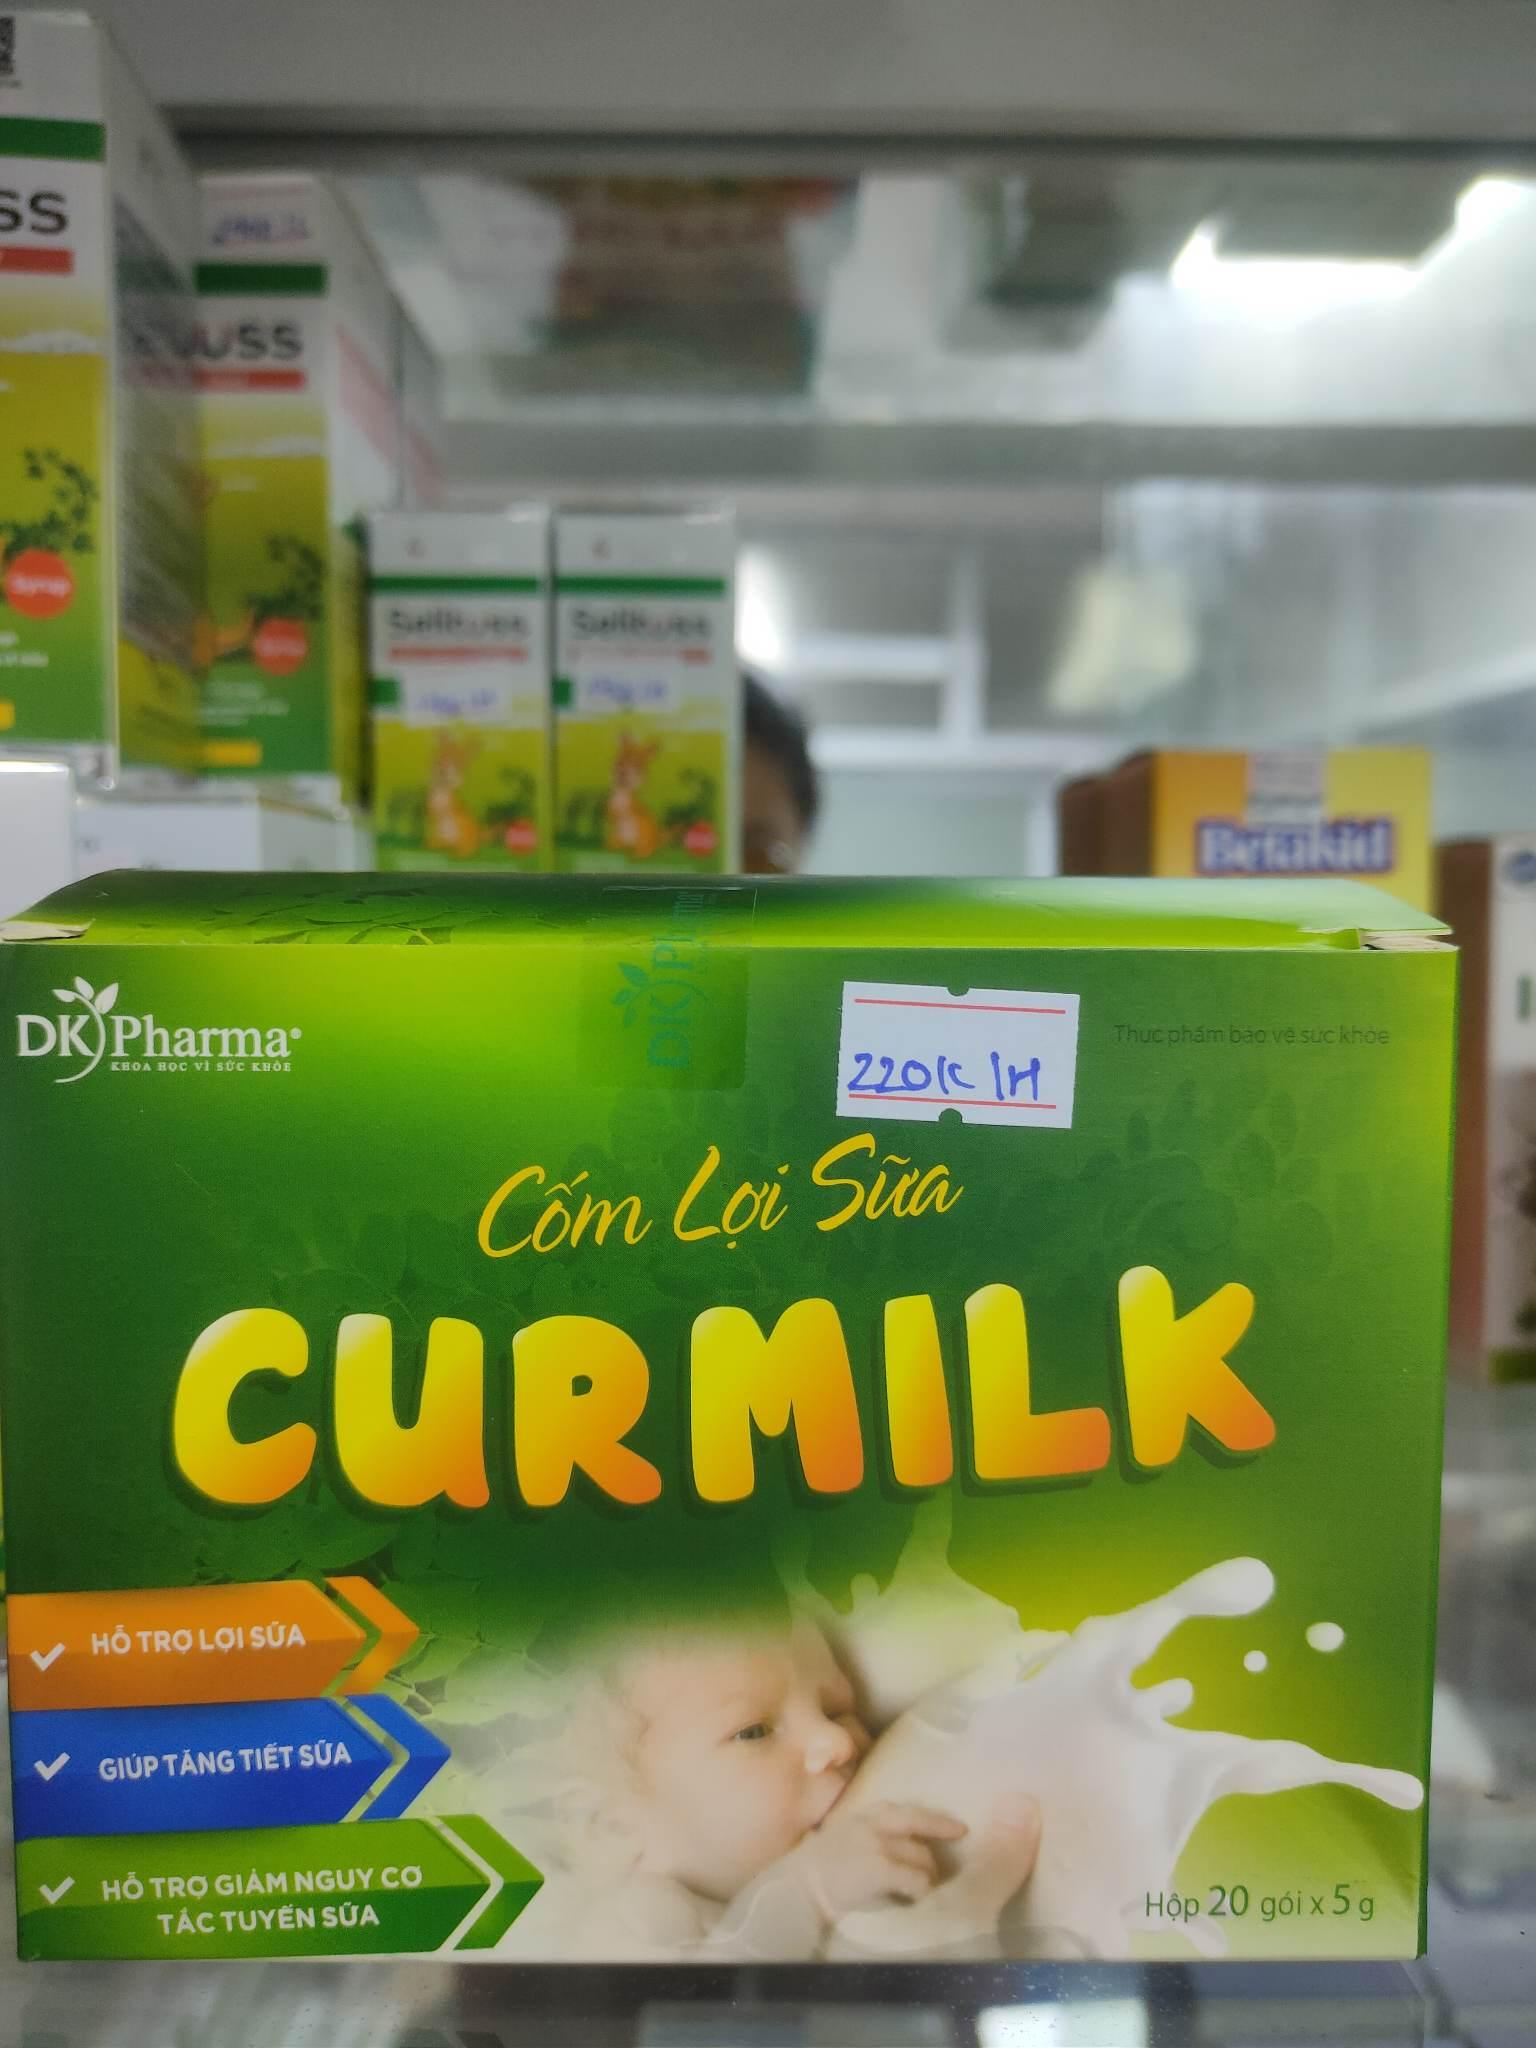 Cốm lợi sữa CURMILK giúp tăng tiết sữa sau sinh